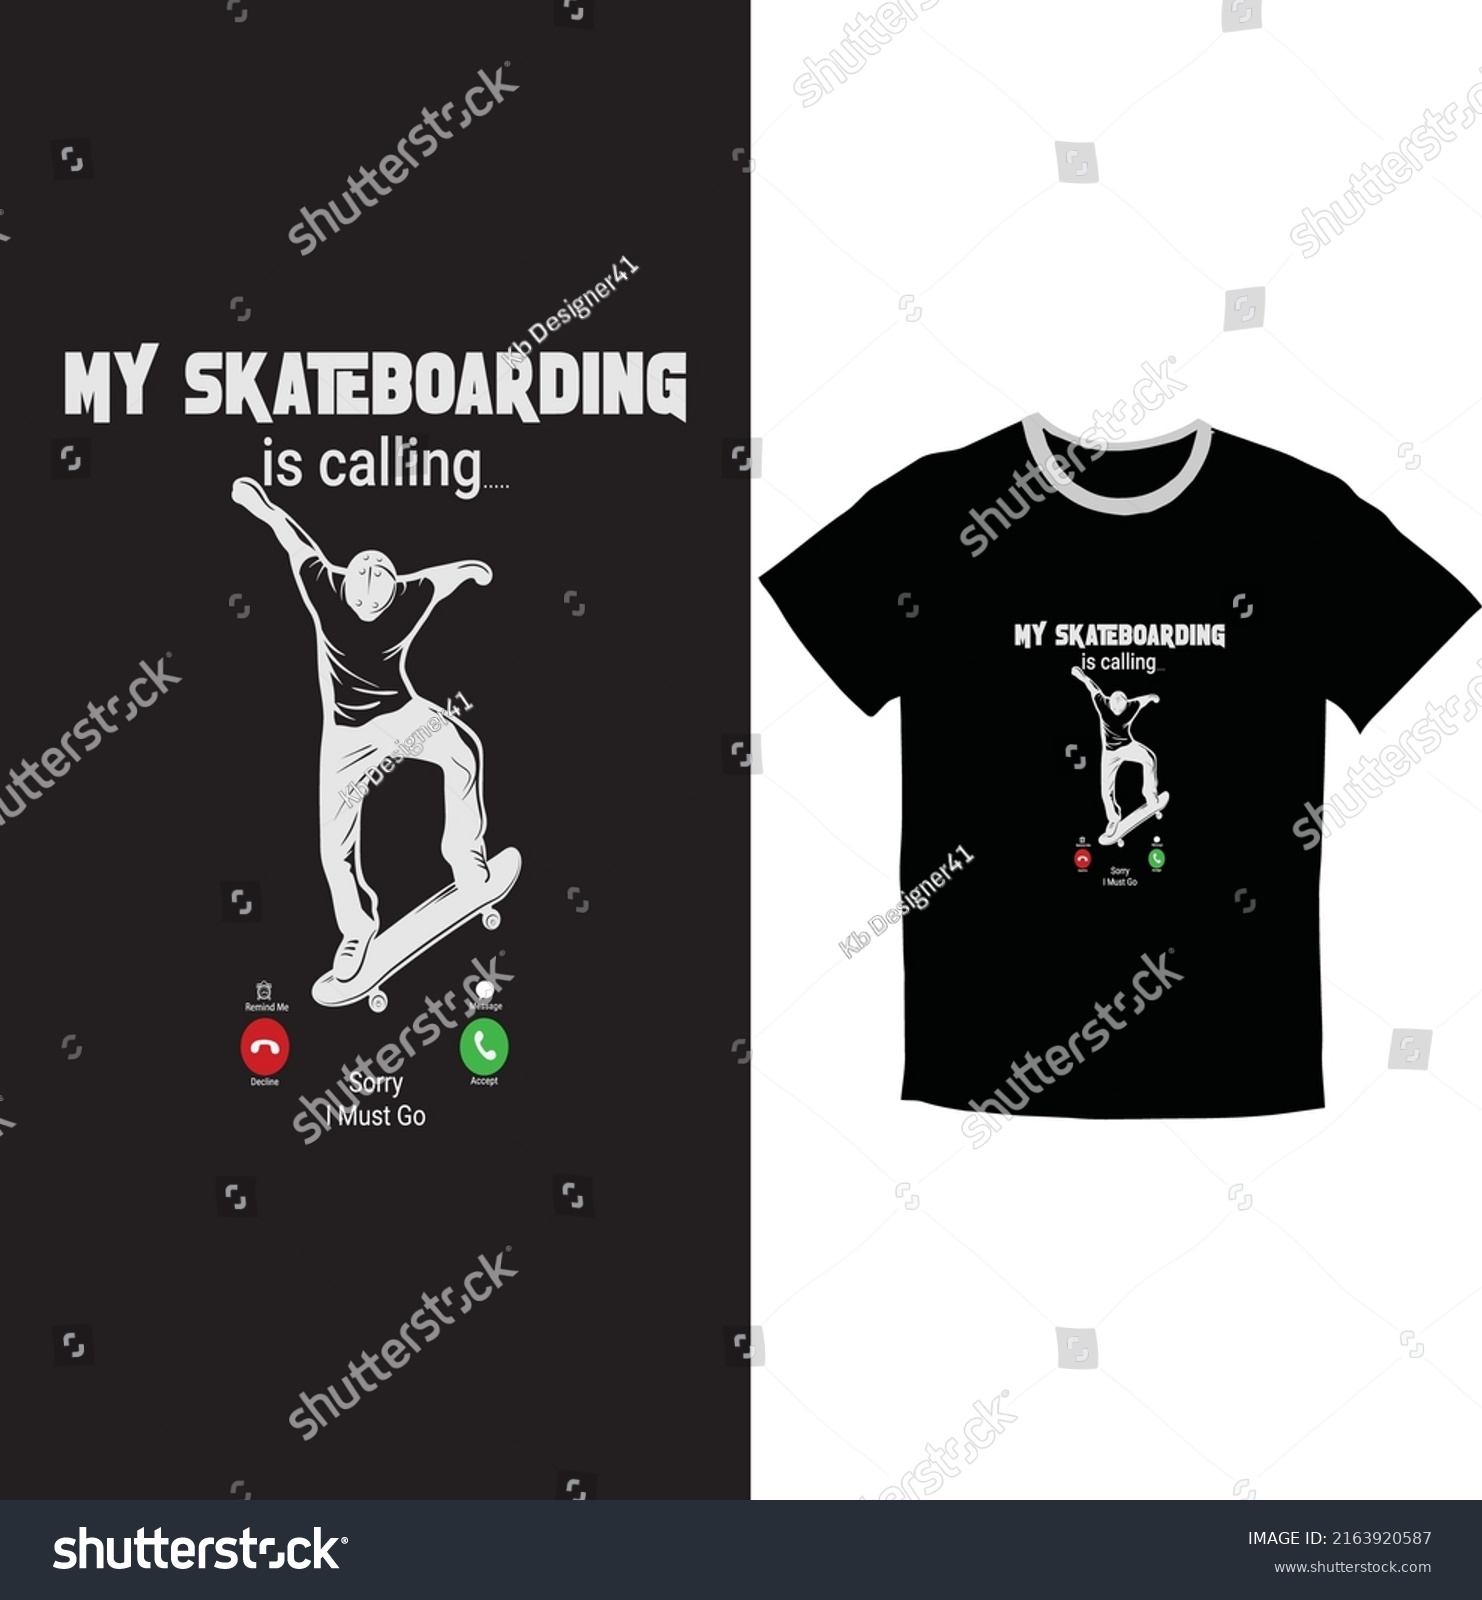 SVG of Skateboarding  t-shirts .My skateboarding t-shirts svg